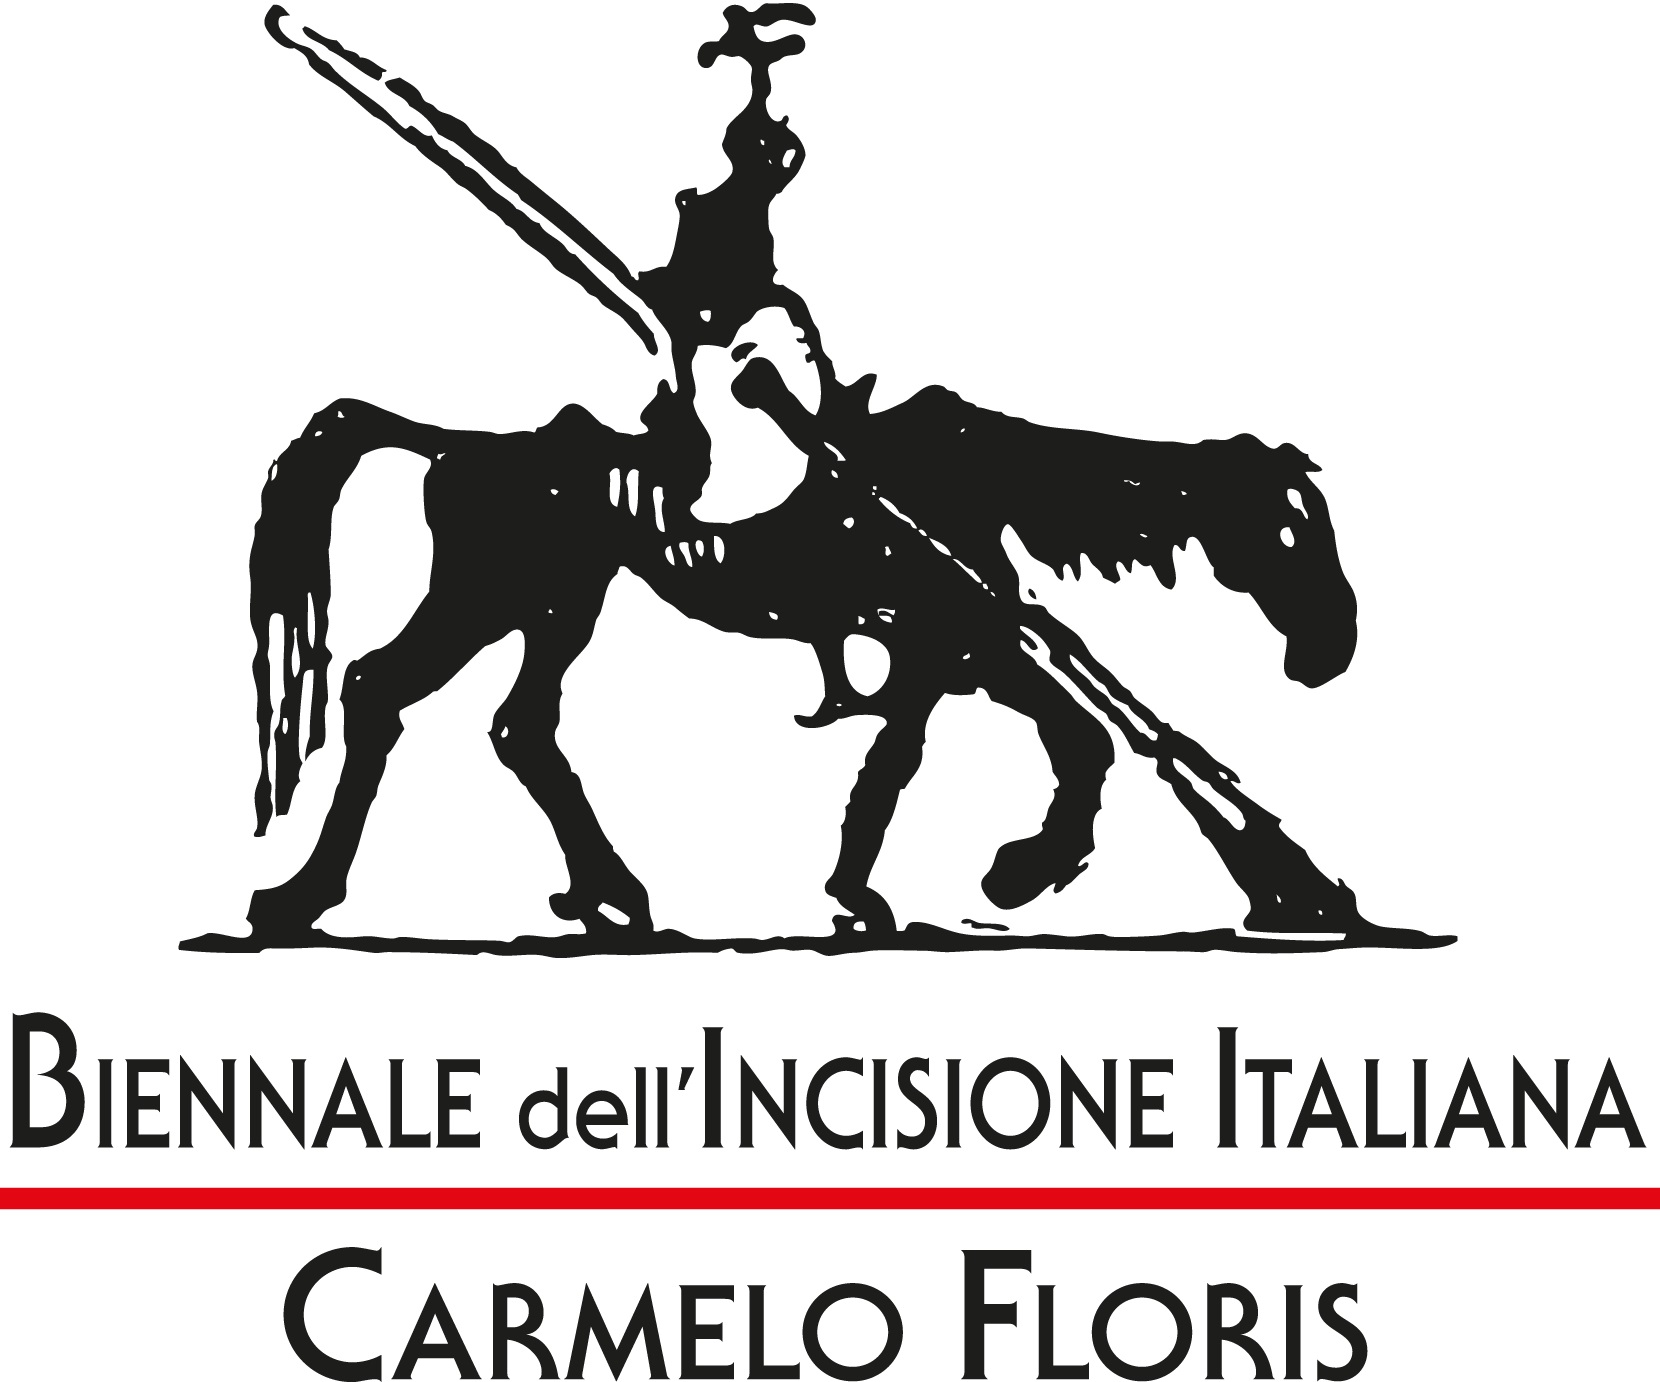 LOGO BIENNALE INCISIONE ITALIANA Carmelo Floris